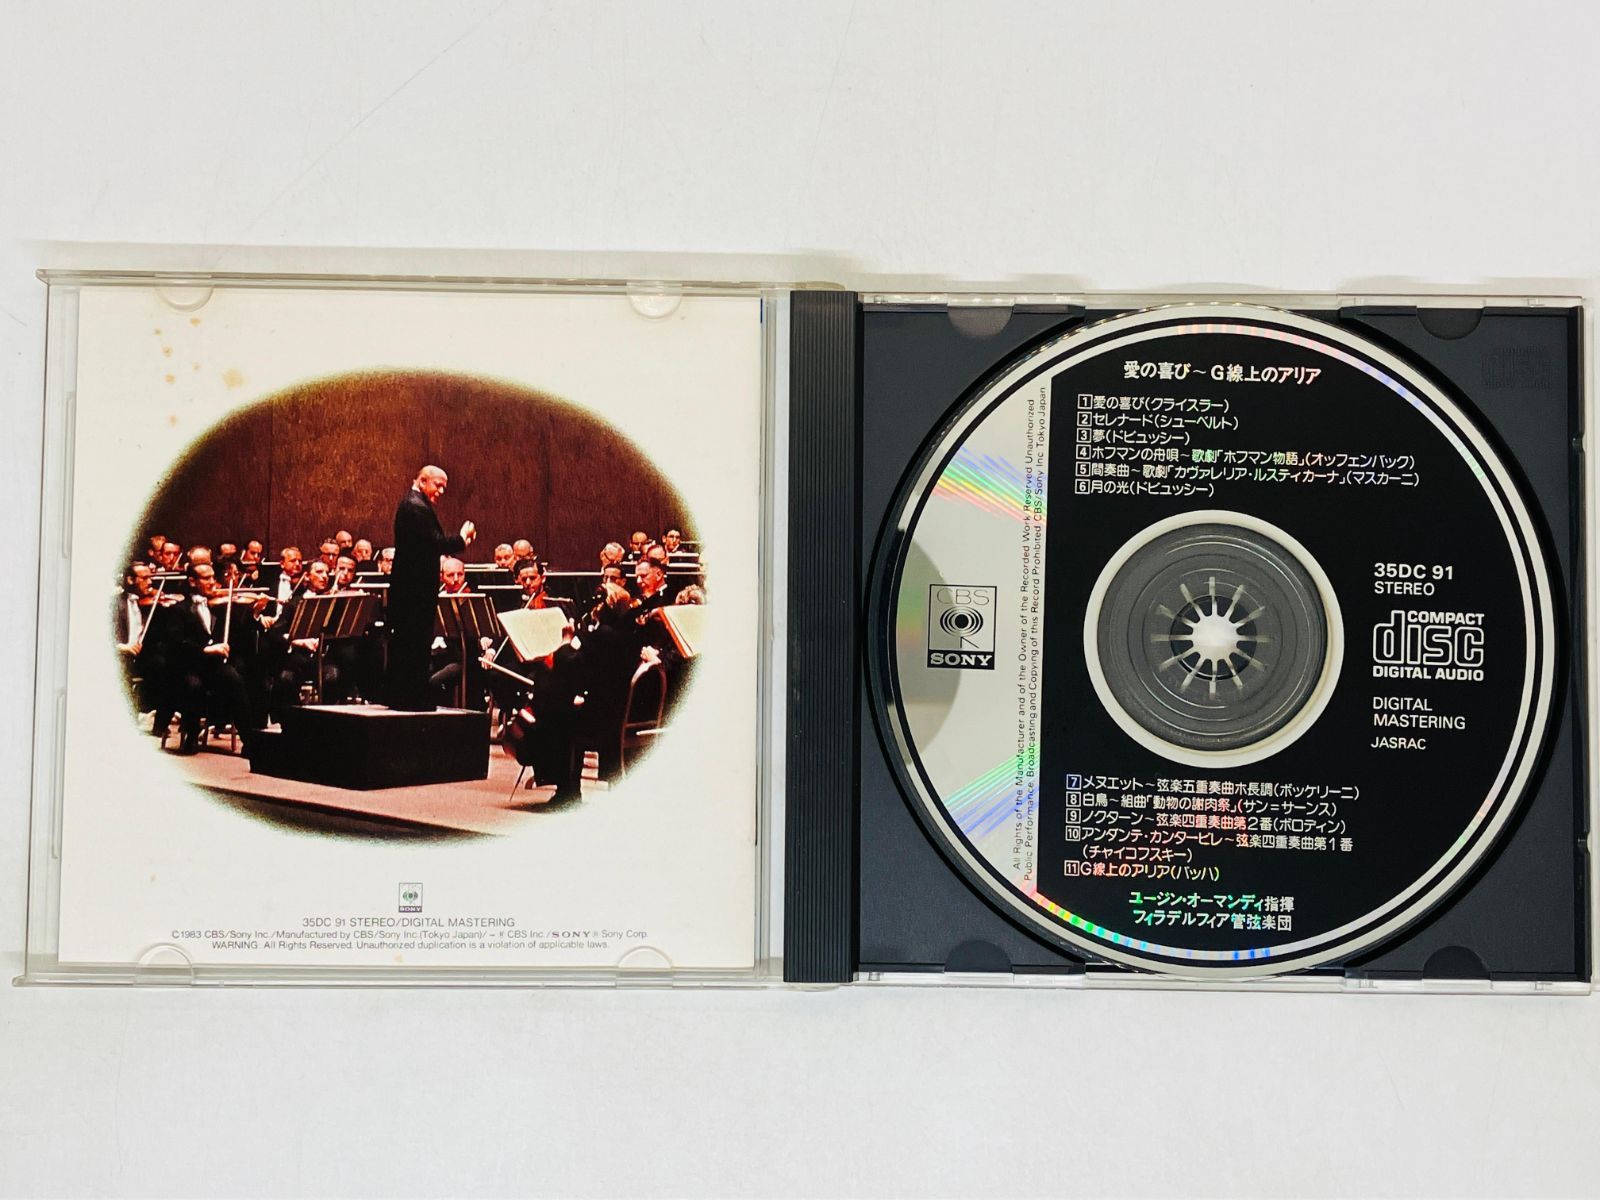 CD 旧規格 LIEBESFREUD ORMANDY / オーマンディ 愛の喜び プロムナード・コンサート / 35DC-91 CBS/SONY Y17